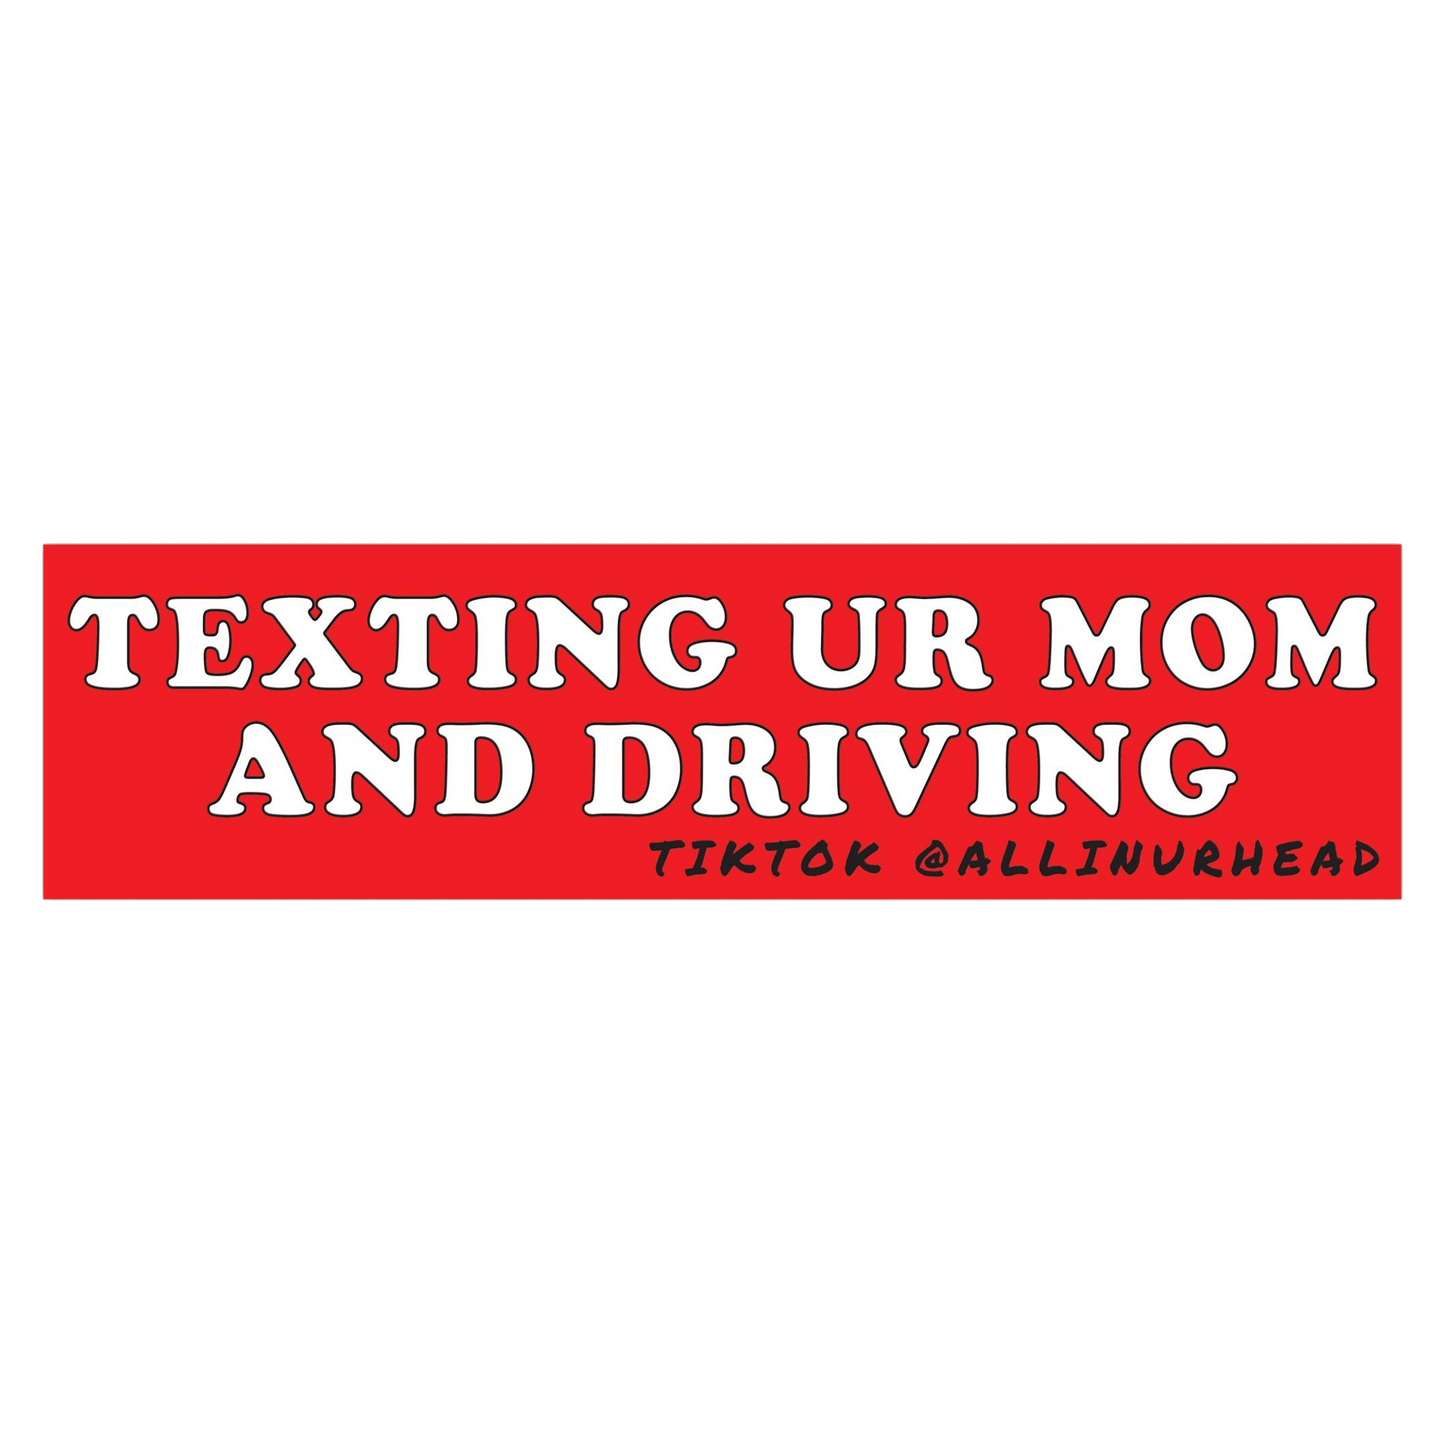 the 'label' - bumper sticker texting ur mom